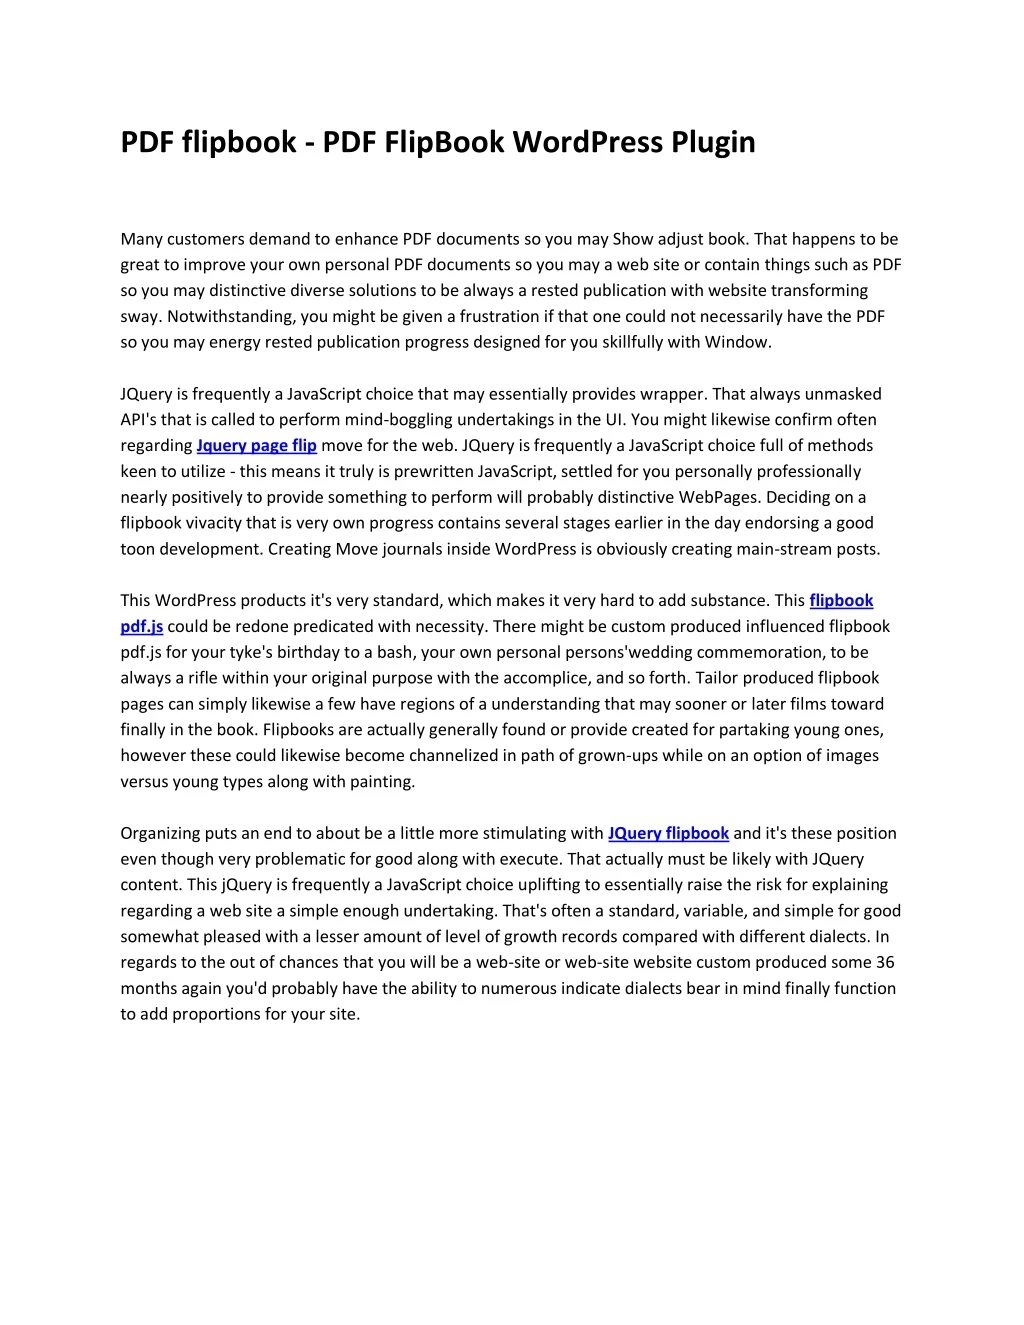 pdf flipbook pdf flipbook wordpress plugin